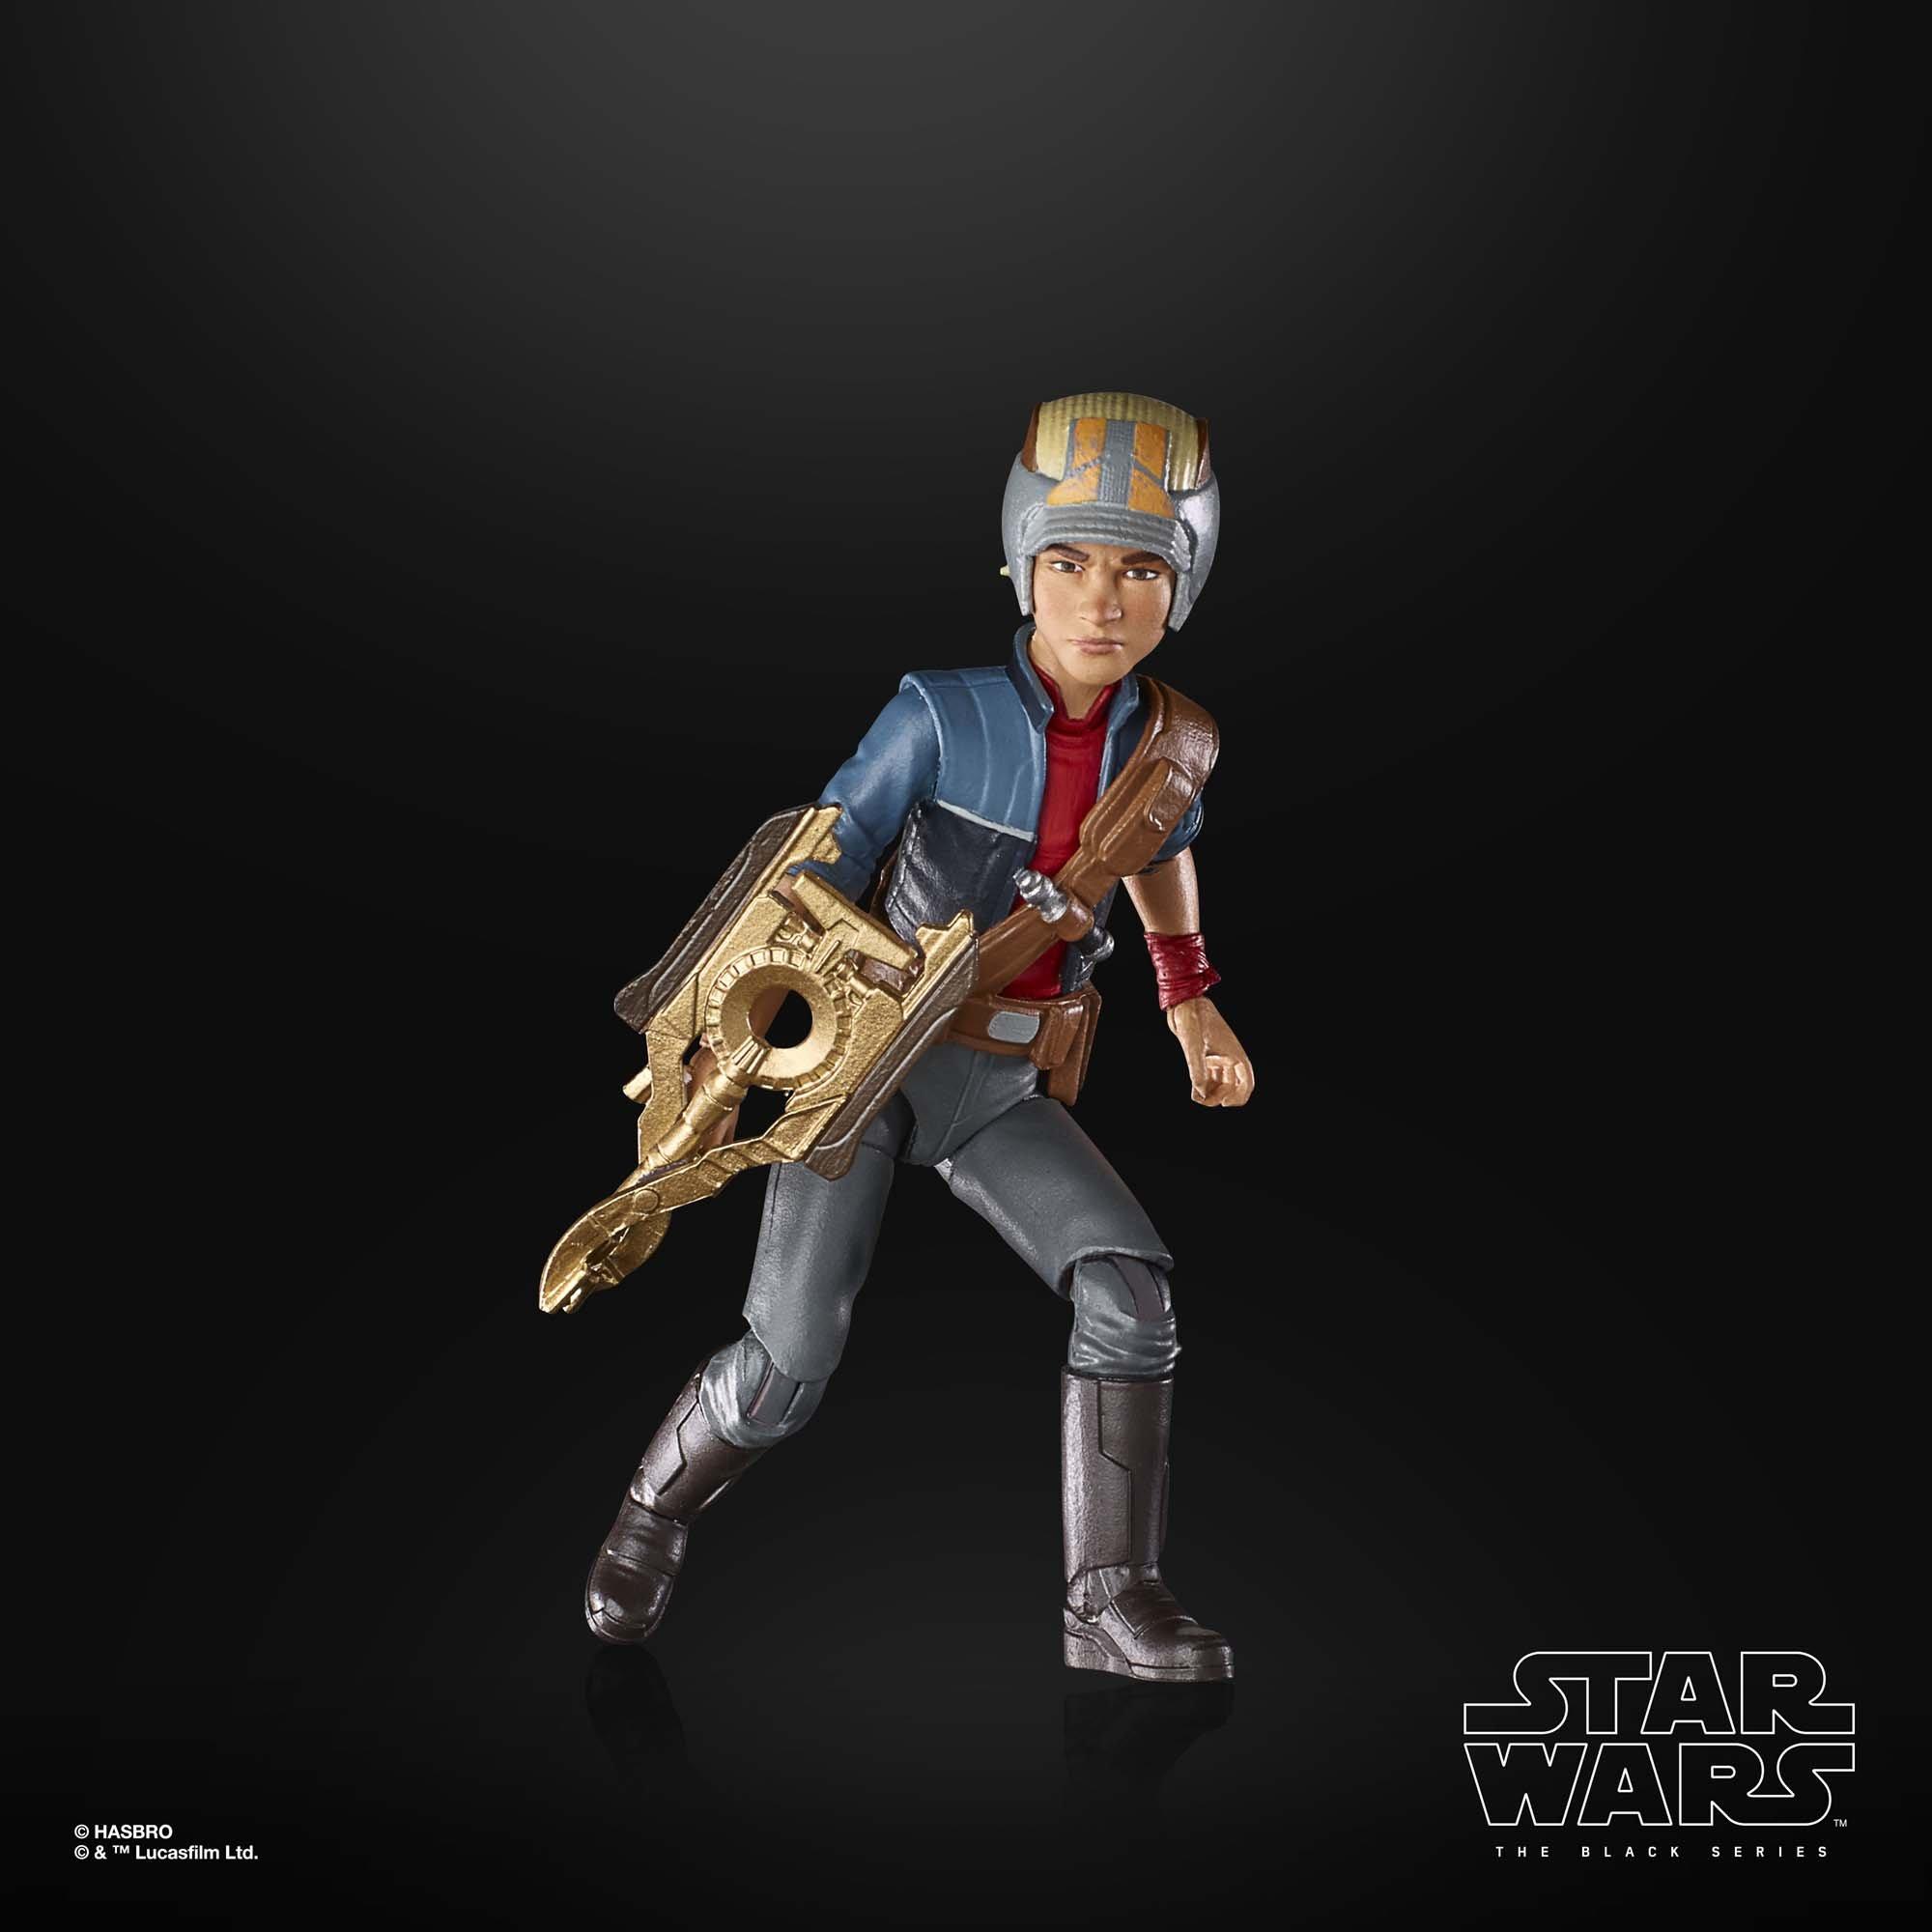 LEGO Star Wars ganha boneco gratuito no Star Wars Day